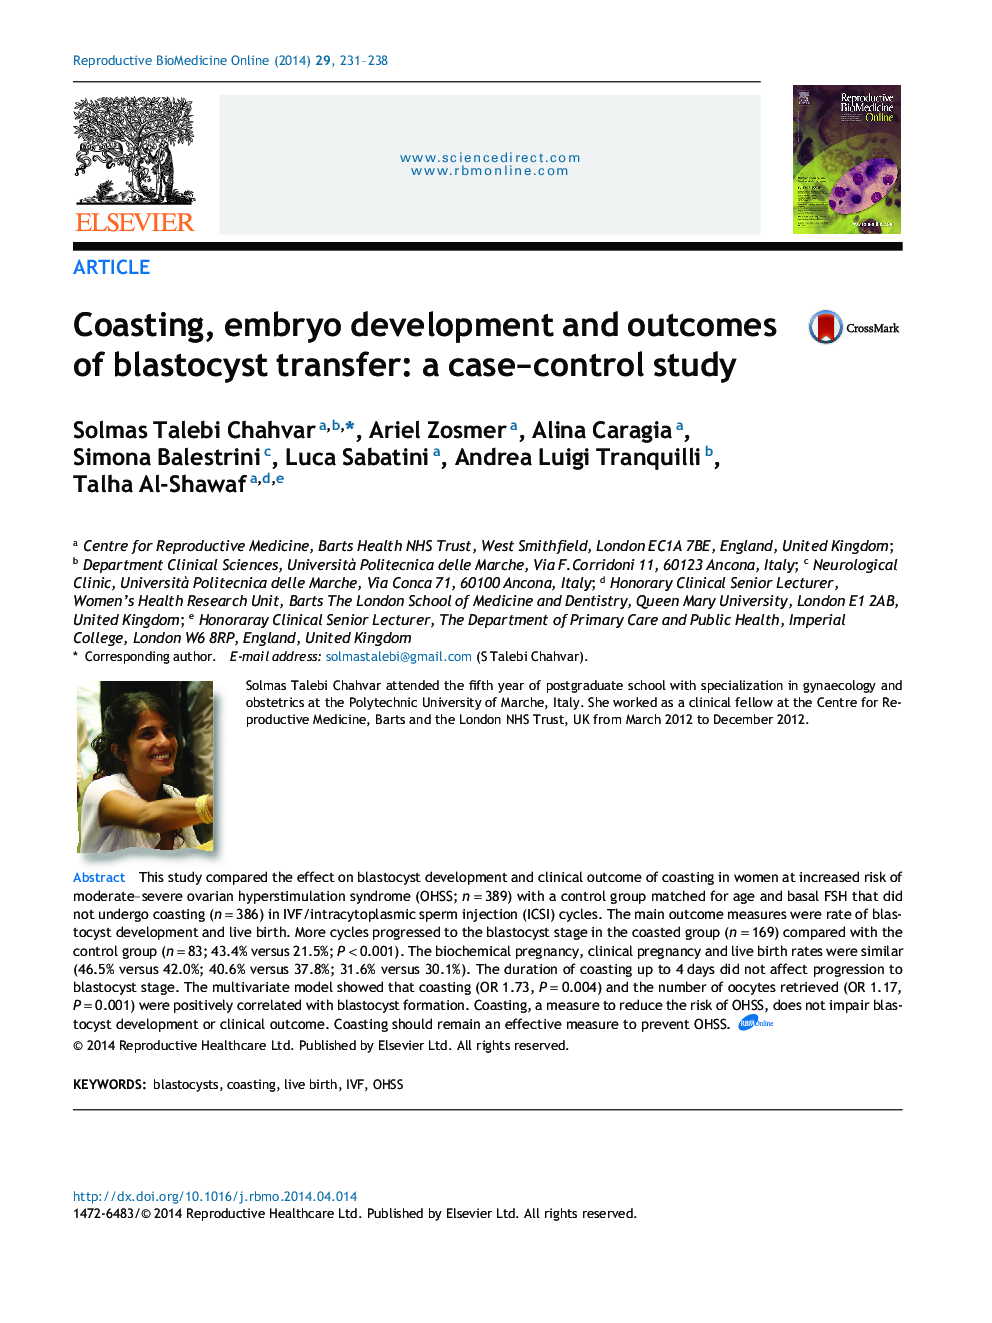 Coasting, embryo development and outcomes of blastocyst transfer: a case-control study